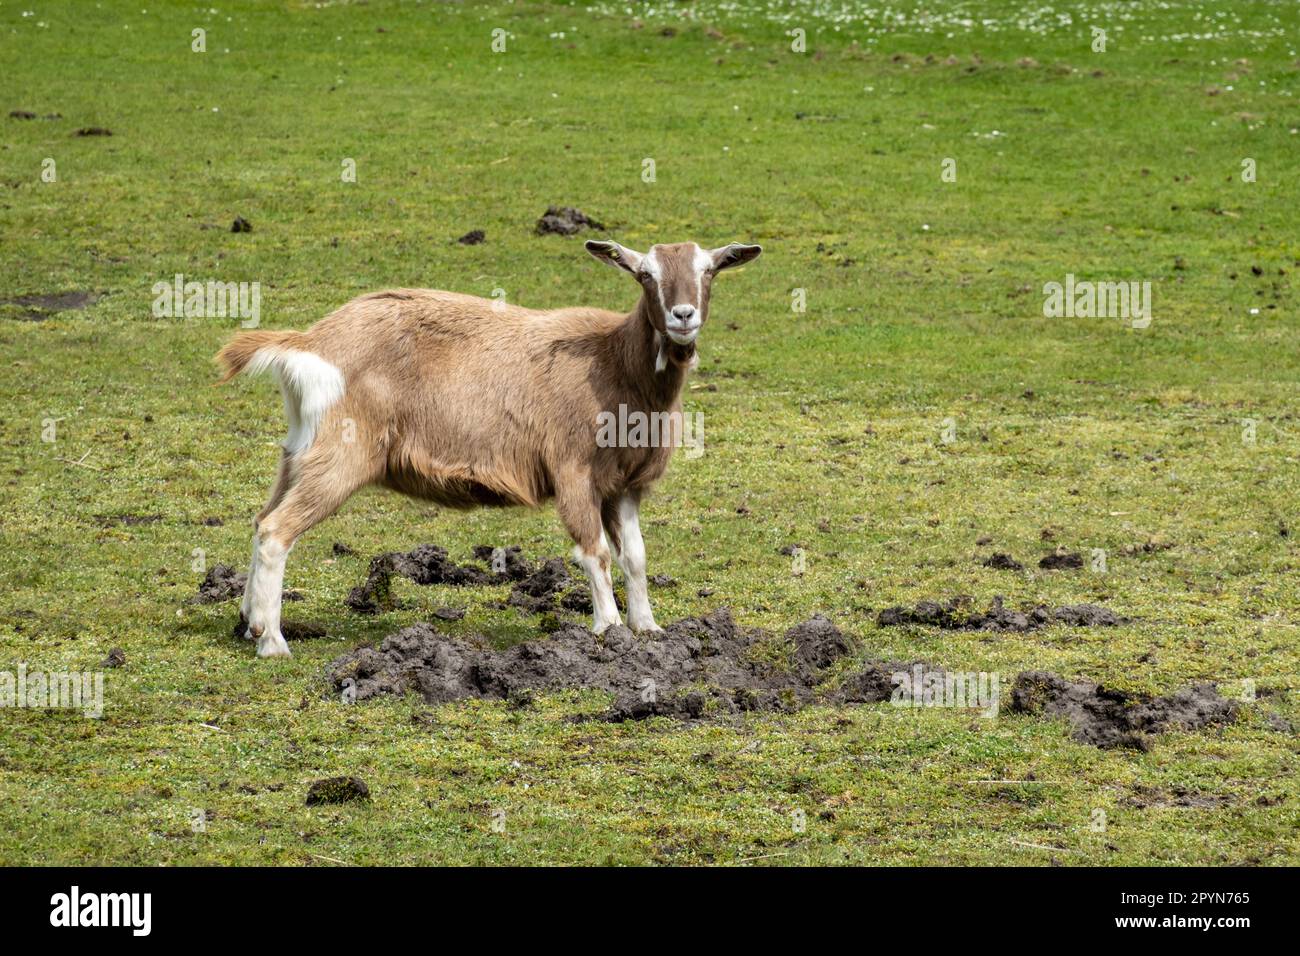 Dutch Toggenburg goat, Capra aegagrus hircus, crossbreeding between former Drenthe land goat and Swiss Toggenburg goat, standing in meadow, Netherland Stock Photo